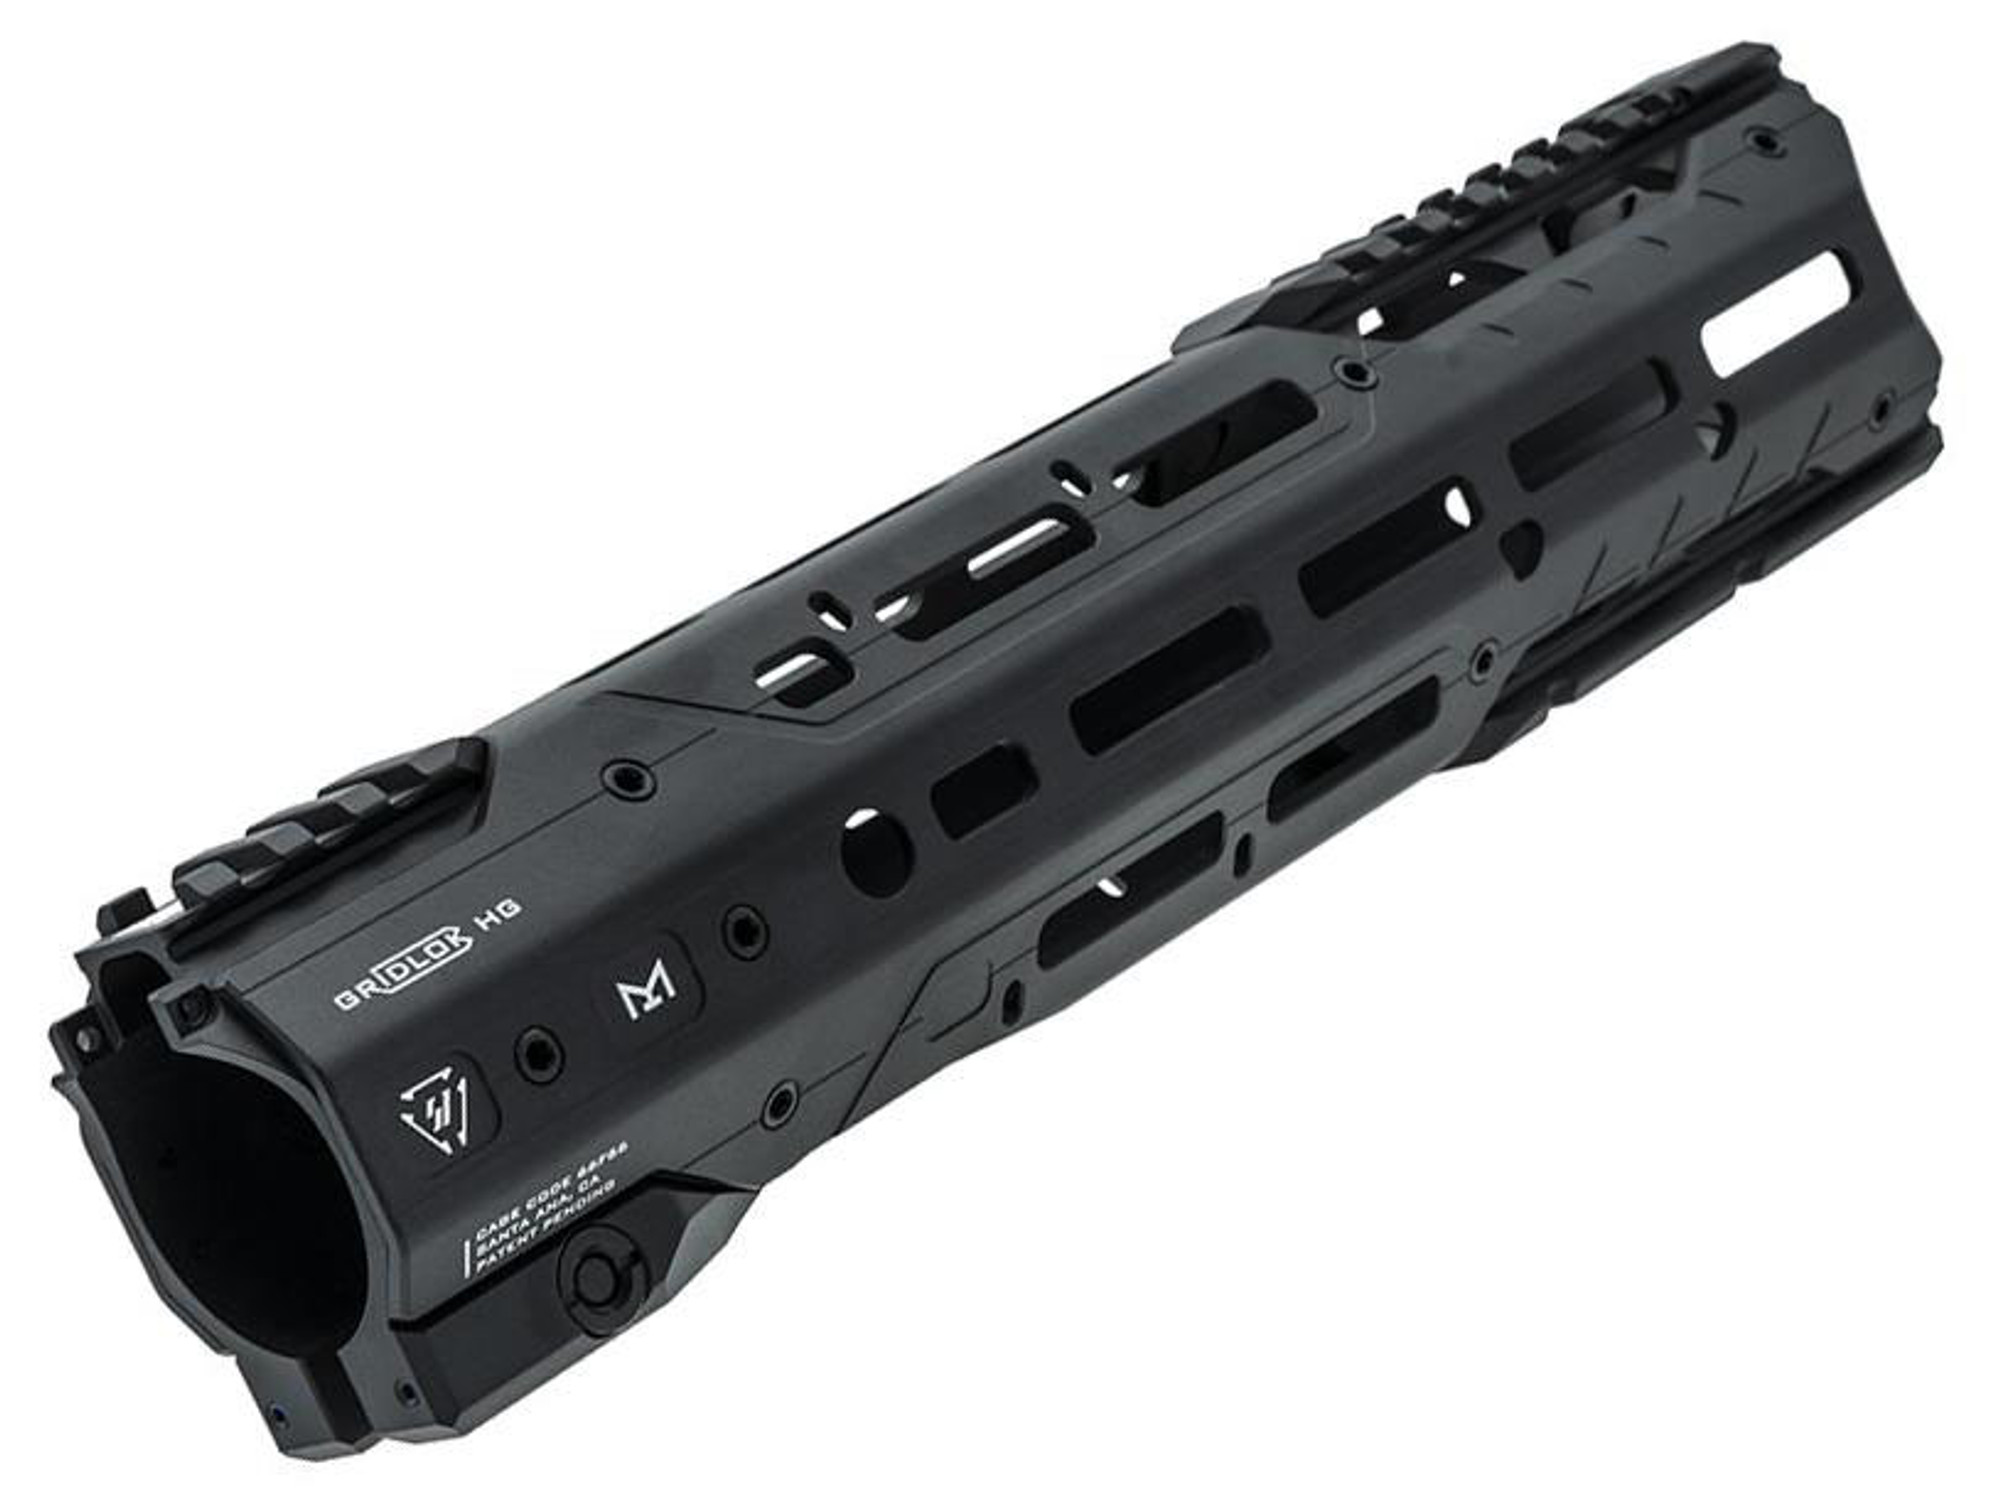 Strike Industries "GridLok" MLOK Free Float Aluminum Handguard for AR15 Rifles (Color: Black)